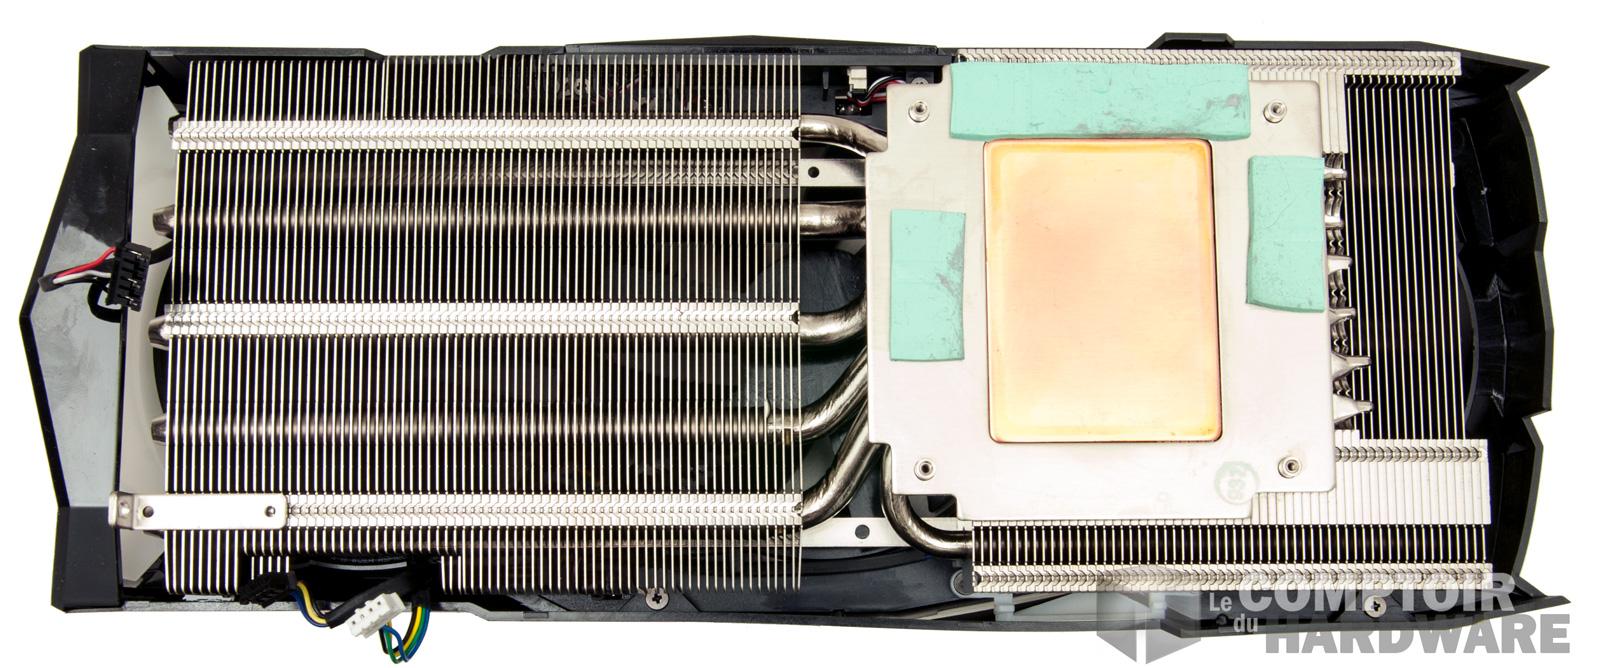 zotac rtx 2080 amp extreme - radiateur côté GPU